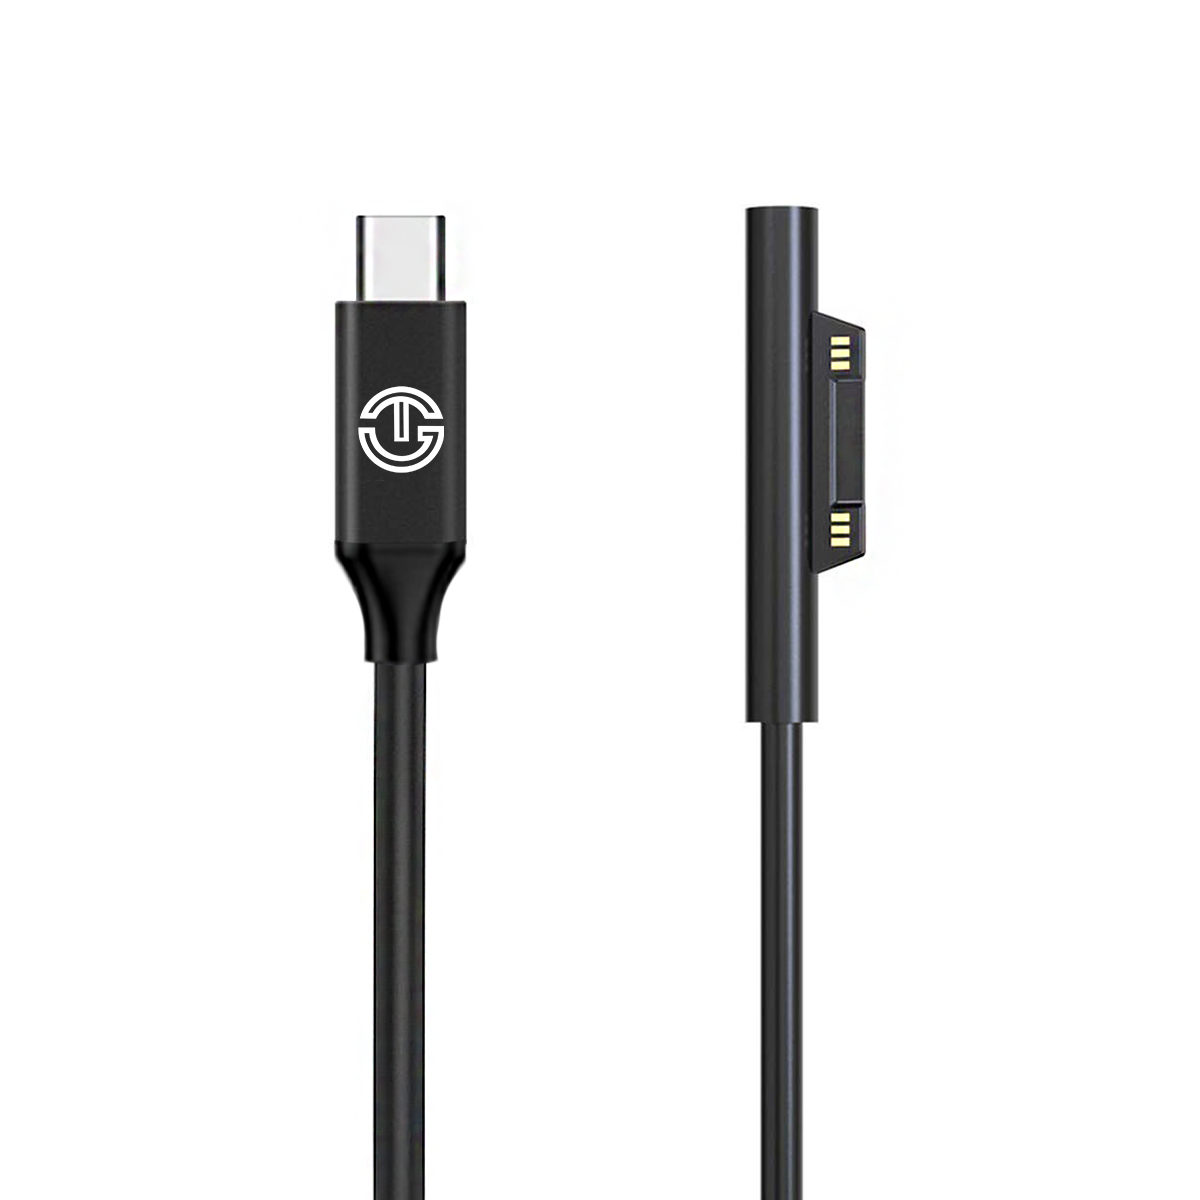 Tak for din hjælp erindringsmønter linned Surface Connect to USB-C Charging Cable PD 15V by J-Go Tech